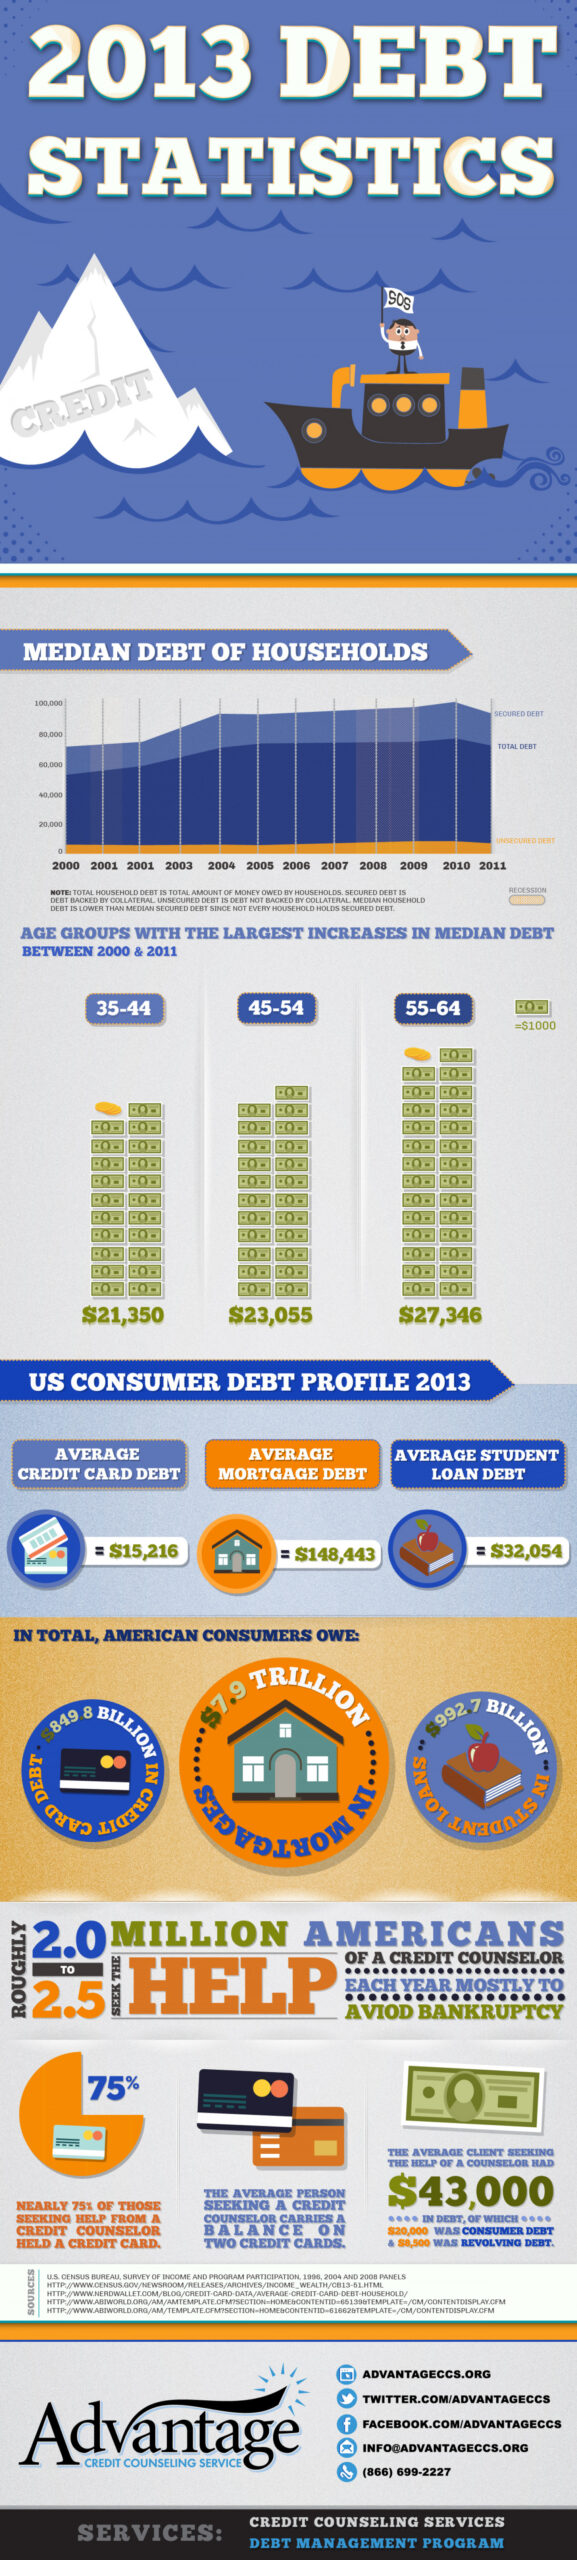 2013 Debt Statistics for US Consumers